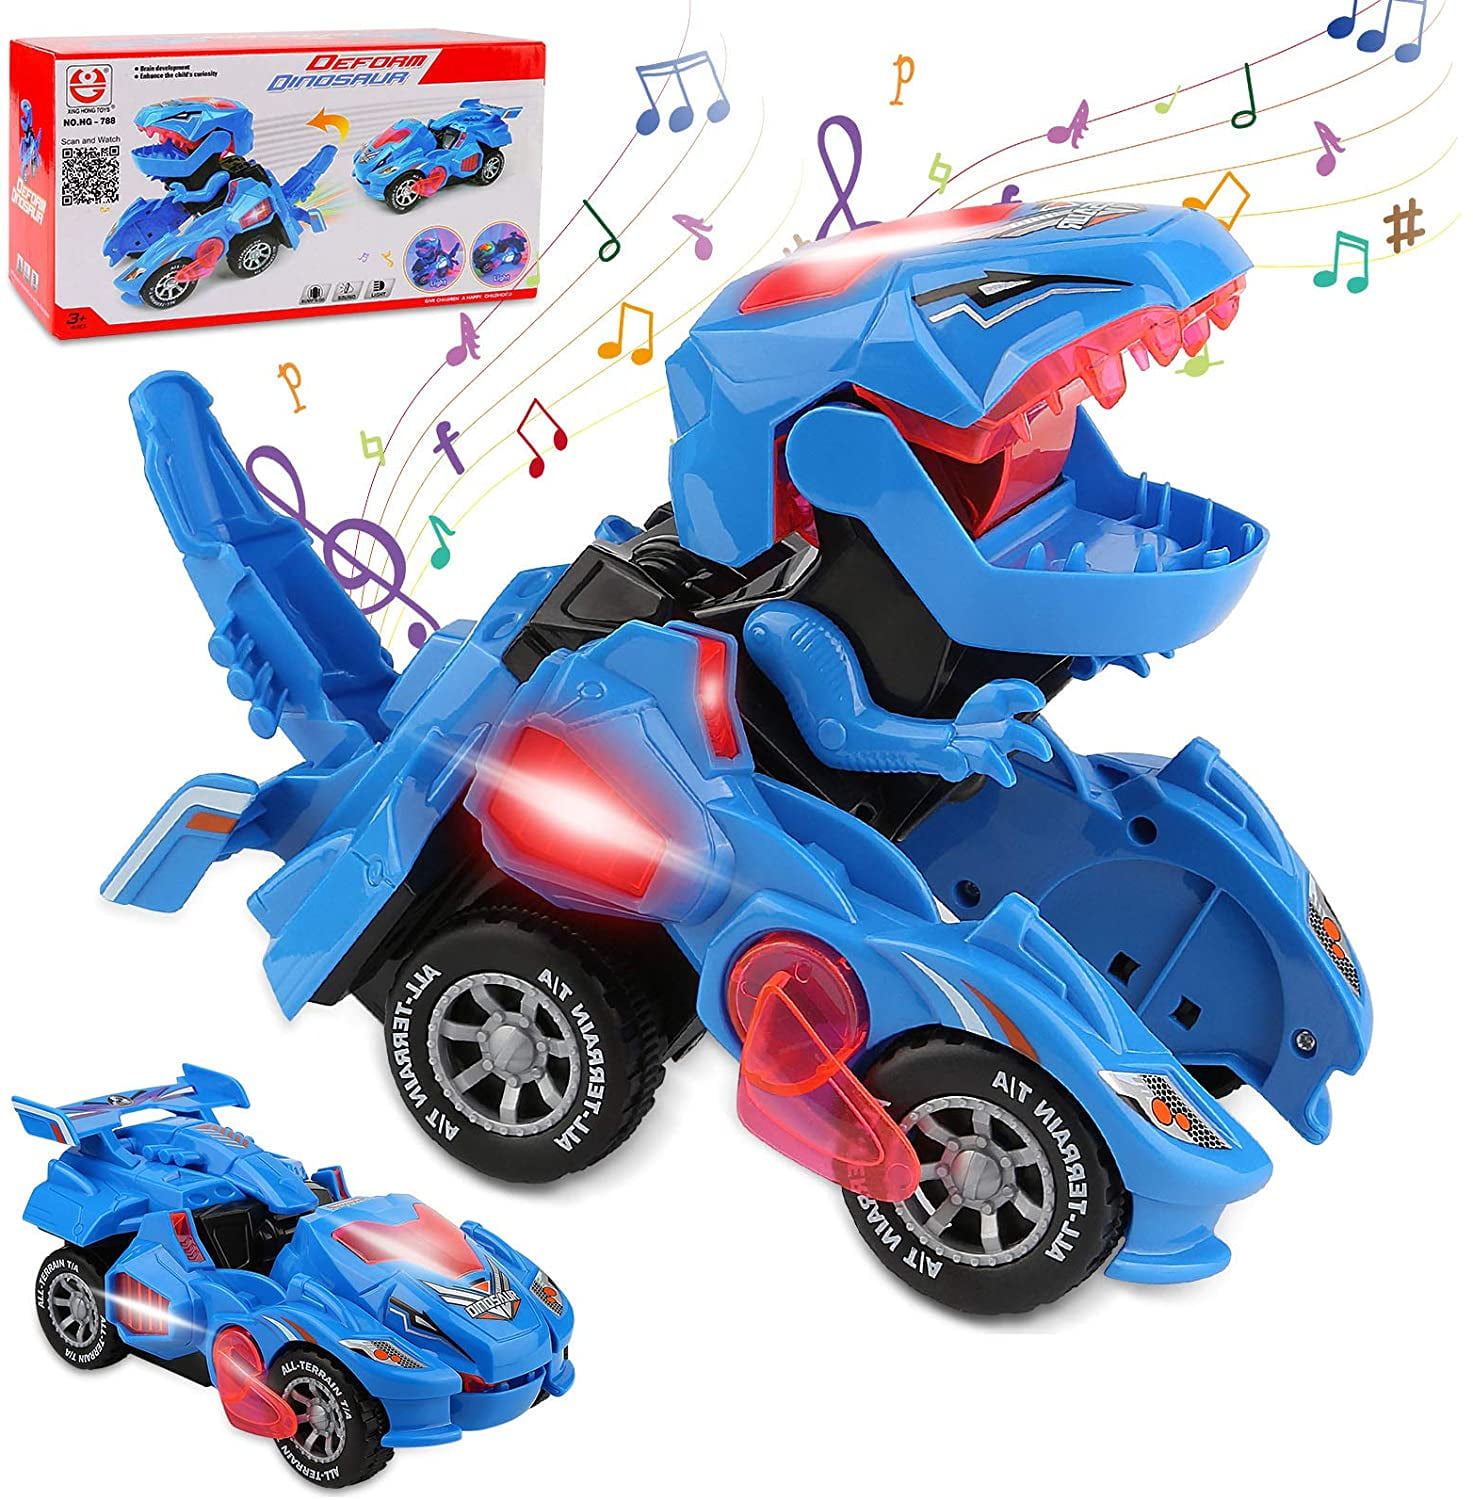 Transformer LED Music Car Dinosaur deformation Car Electric Toy Children's Gifts